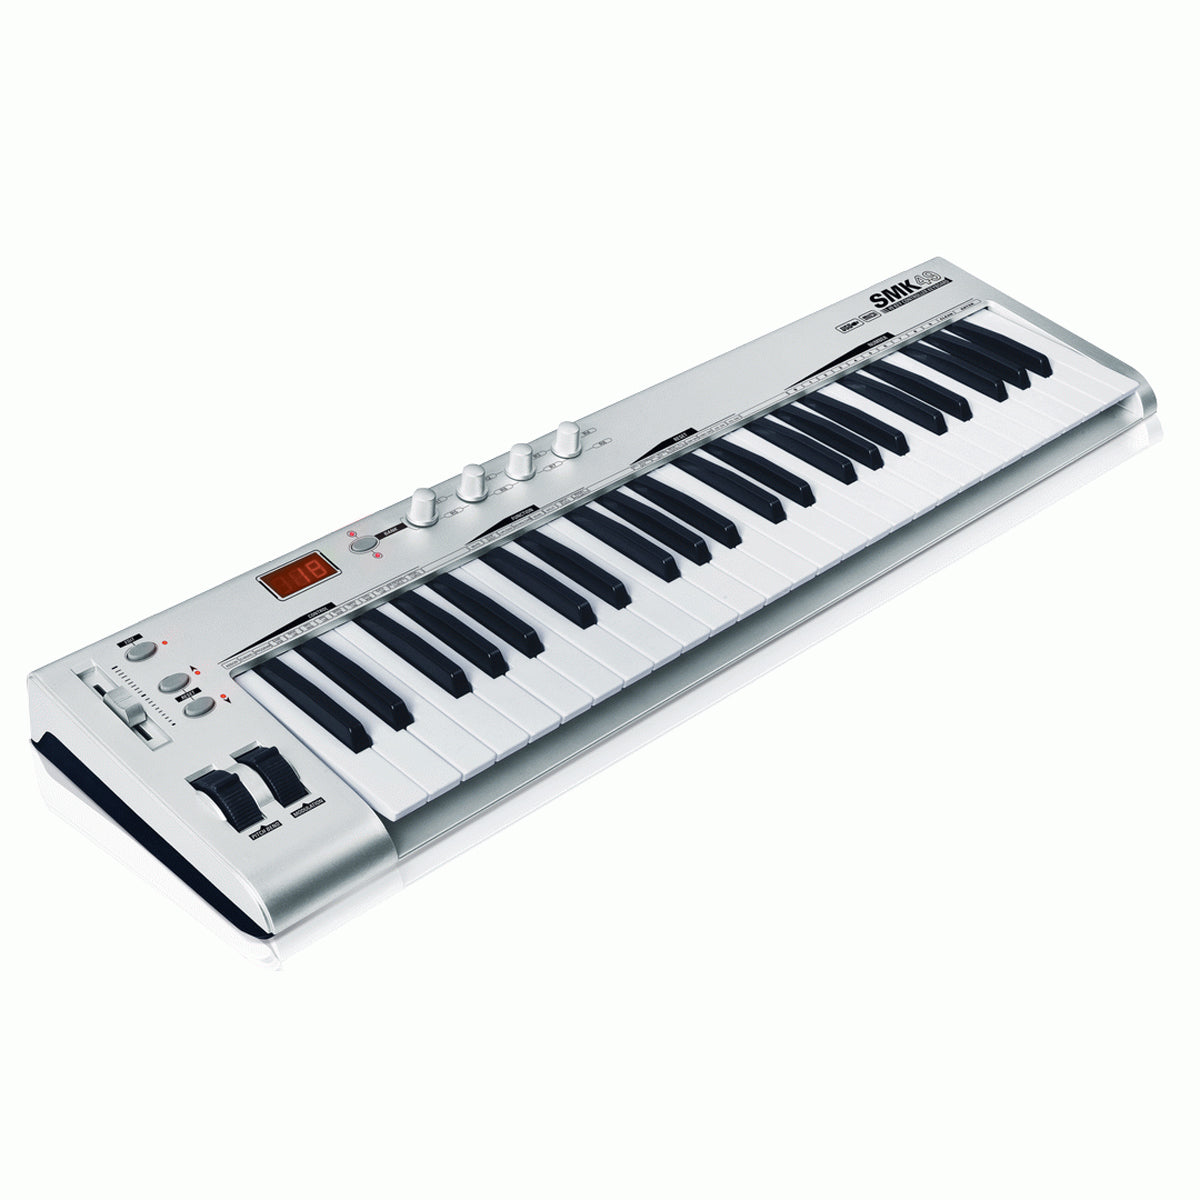 Smart Acoustic SMK49 Multi-functional USB/MIDI Controller Keyboard